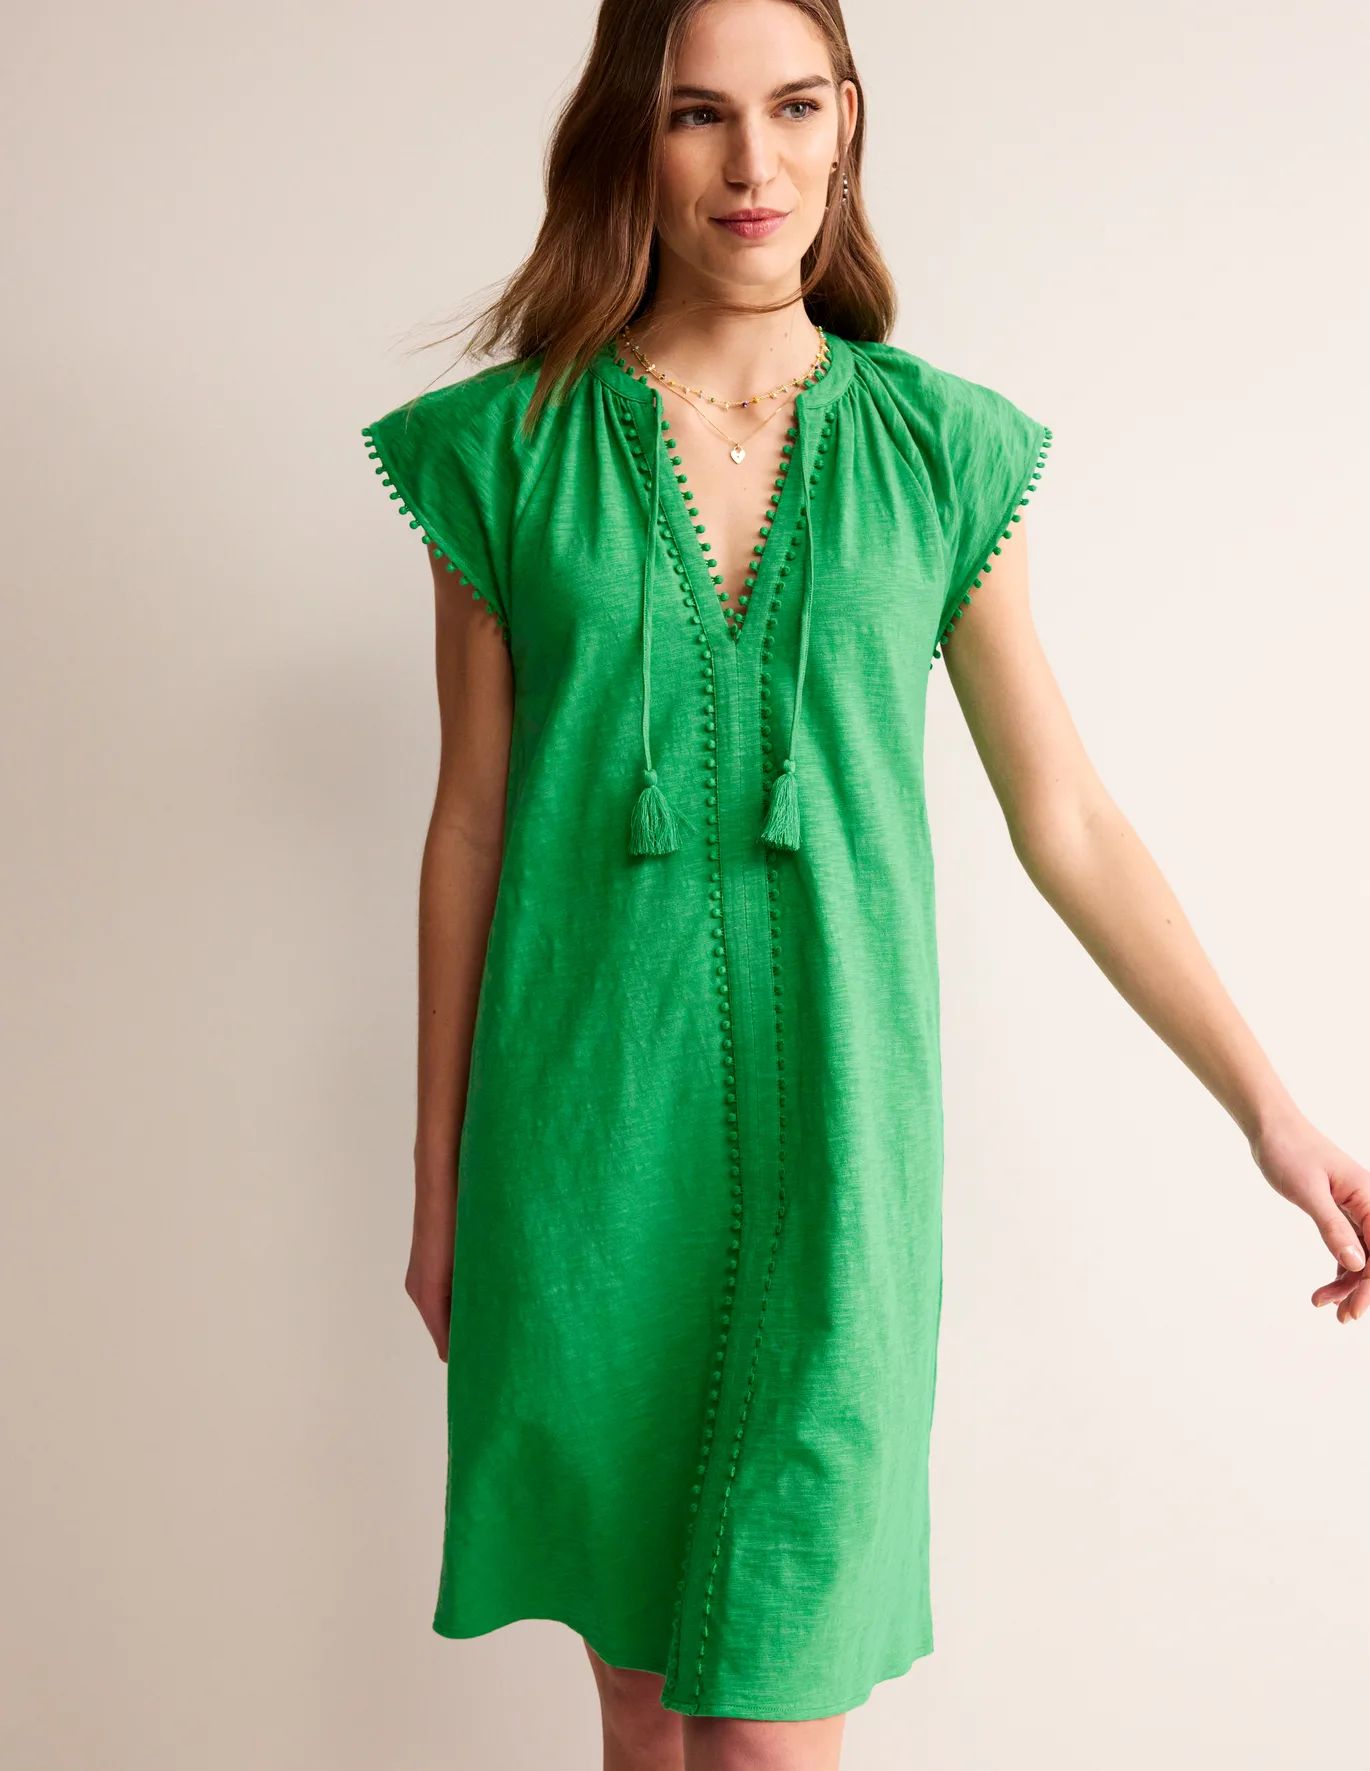 Millie Pom Cotton Dress | Boden (US)